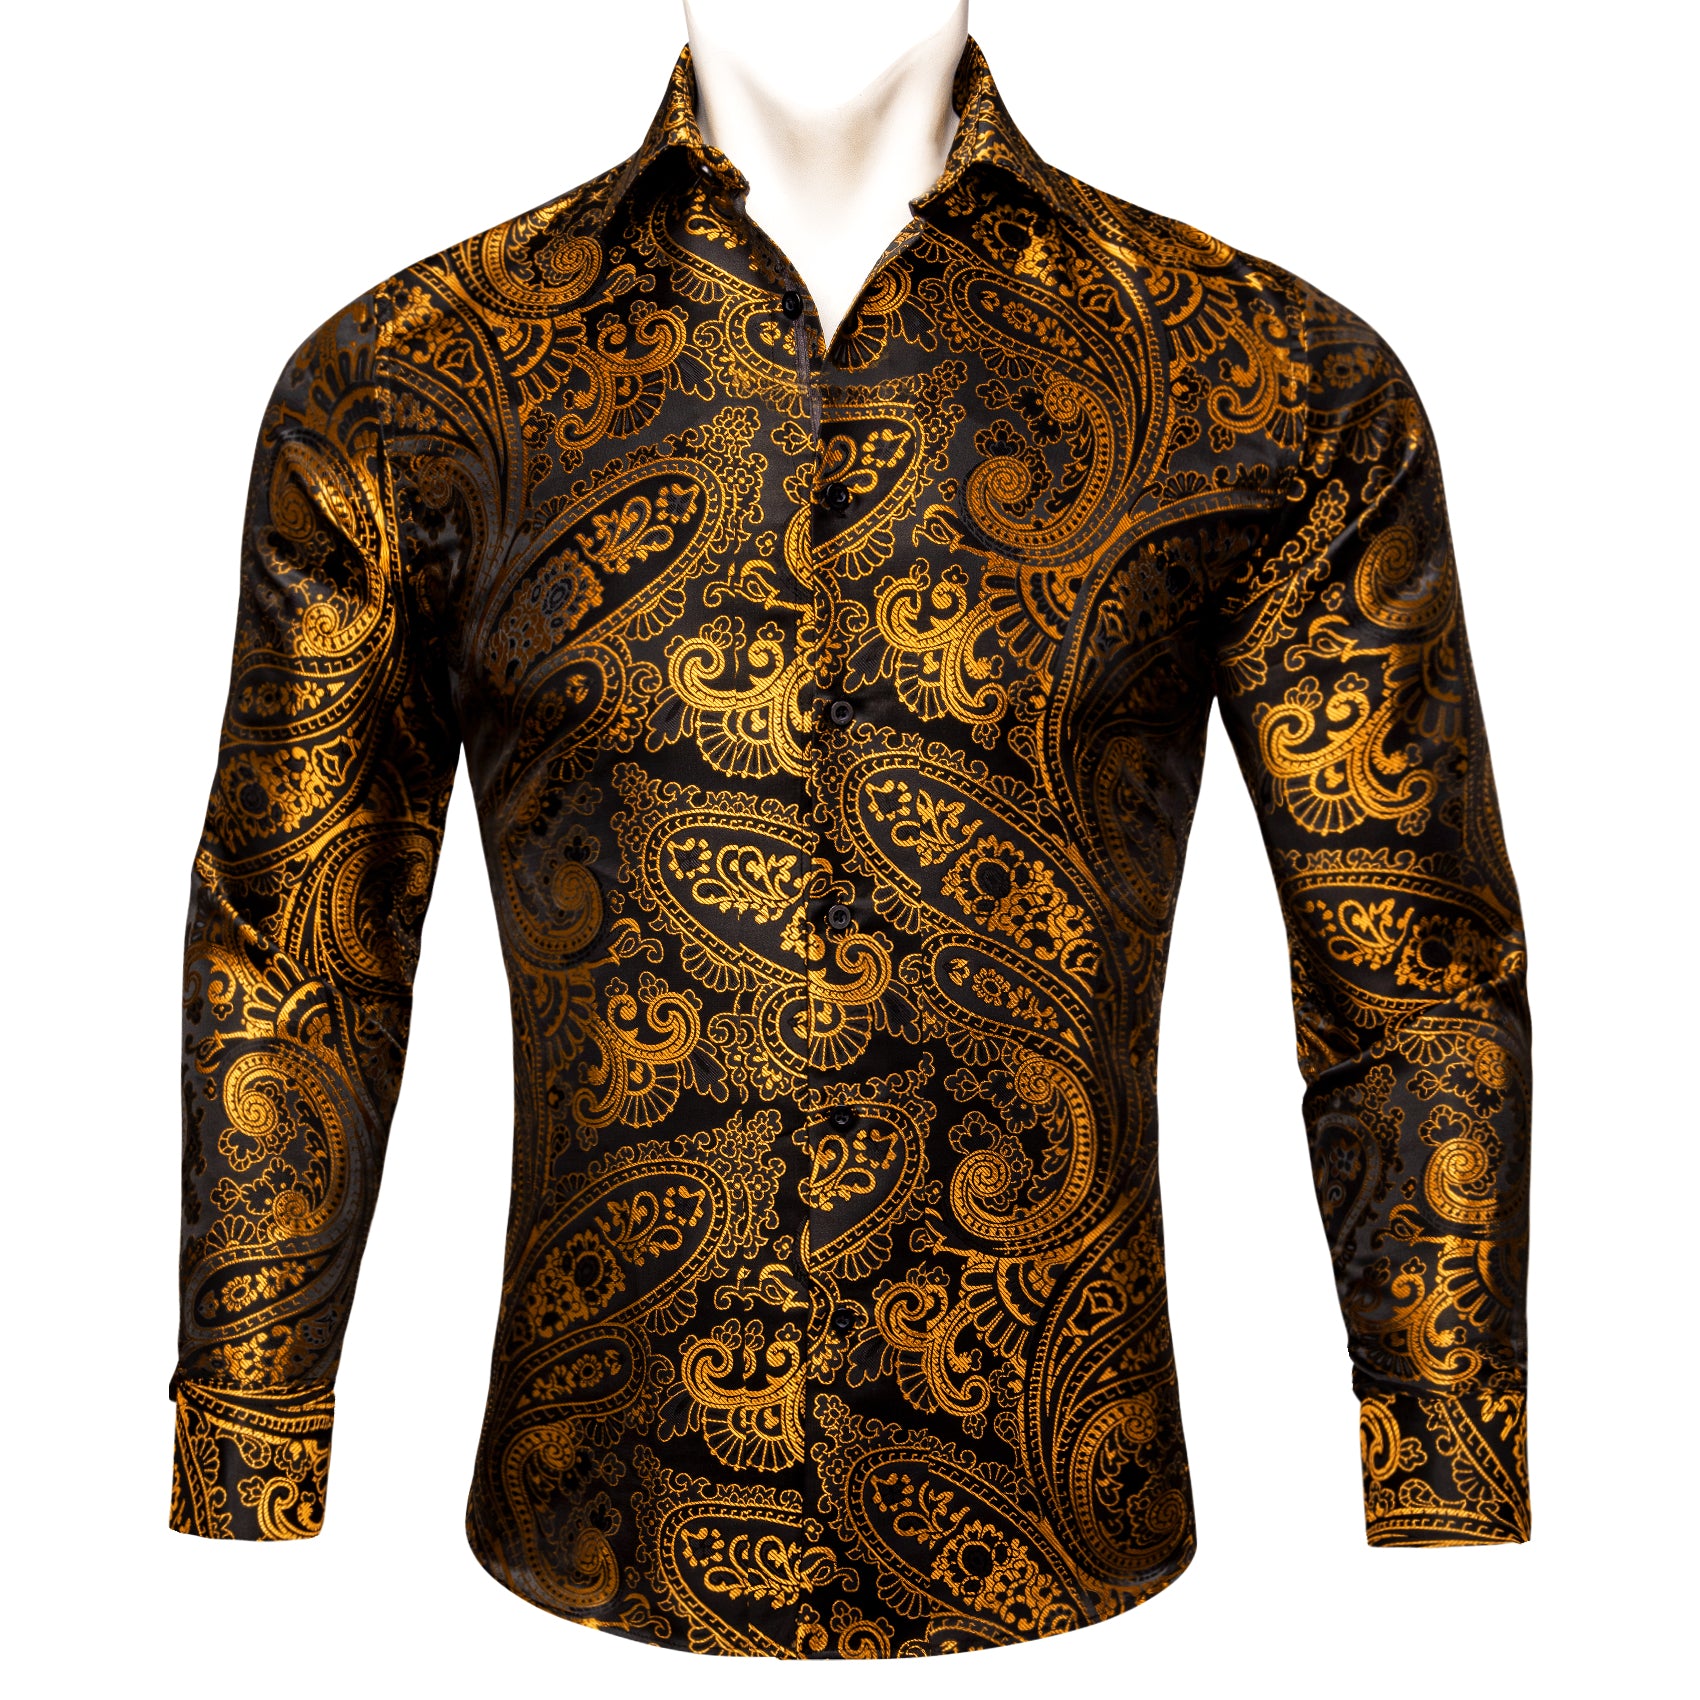 Barry.wang Gold Black Paisley Silk Men's Shirt